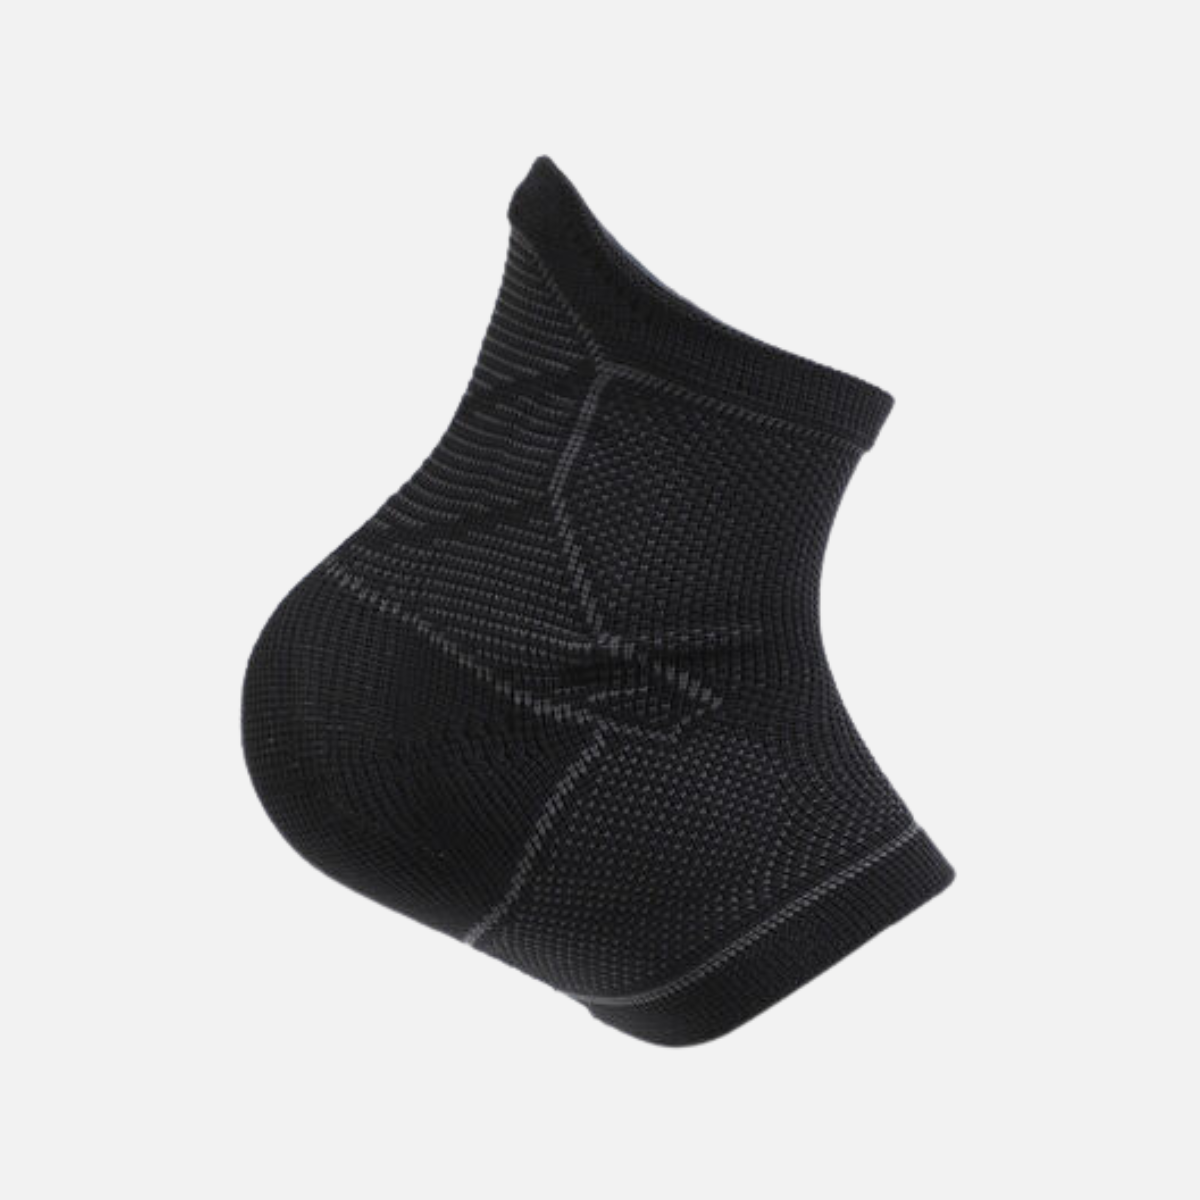 Nike Pro Knit Ankle Sleeve -Black